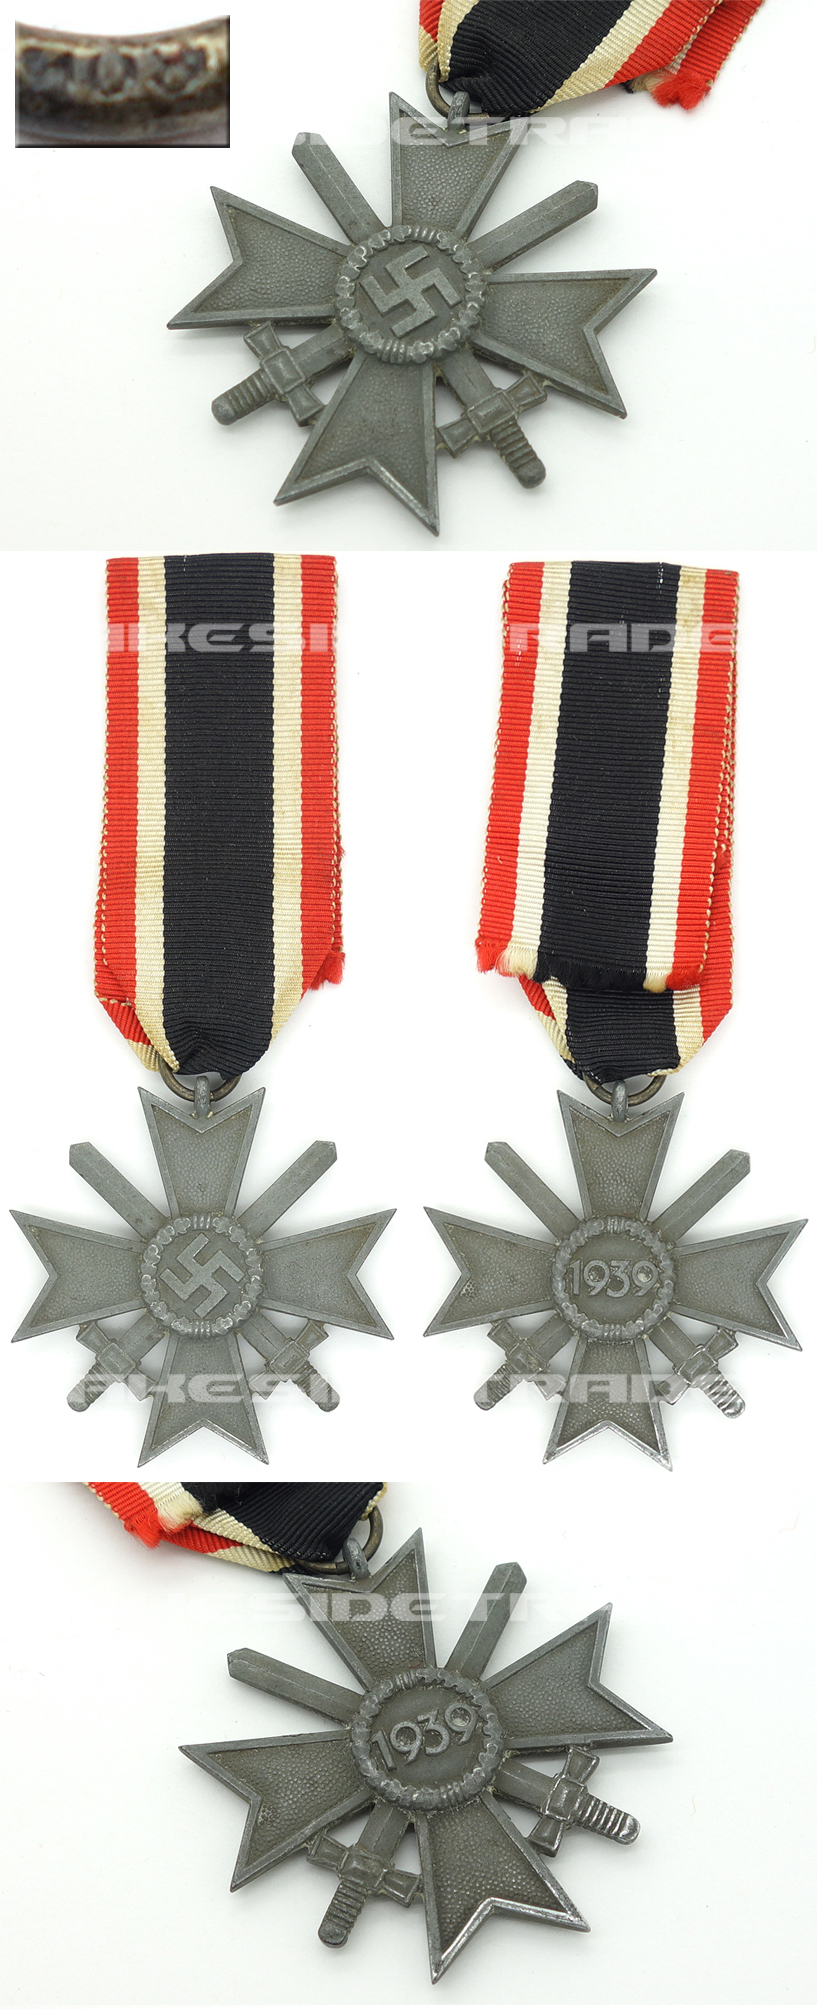 2nd Class War Merit Cross with Swords by 108